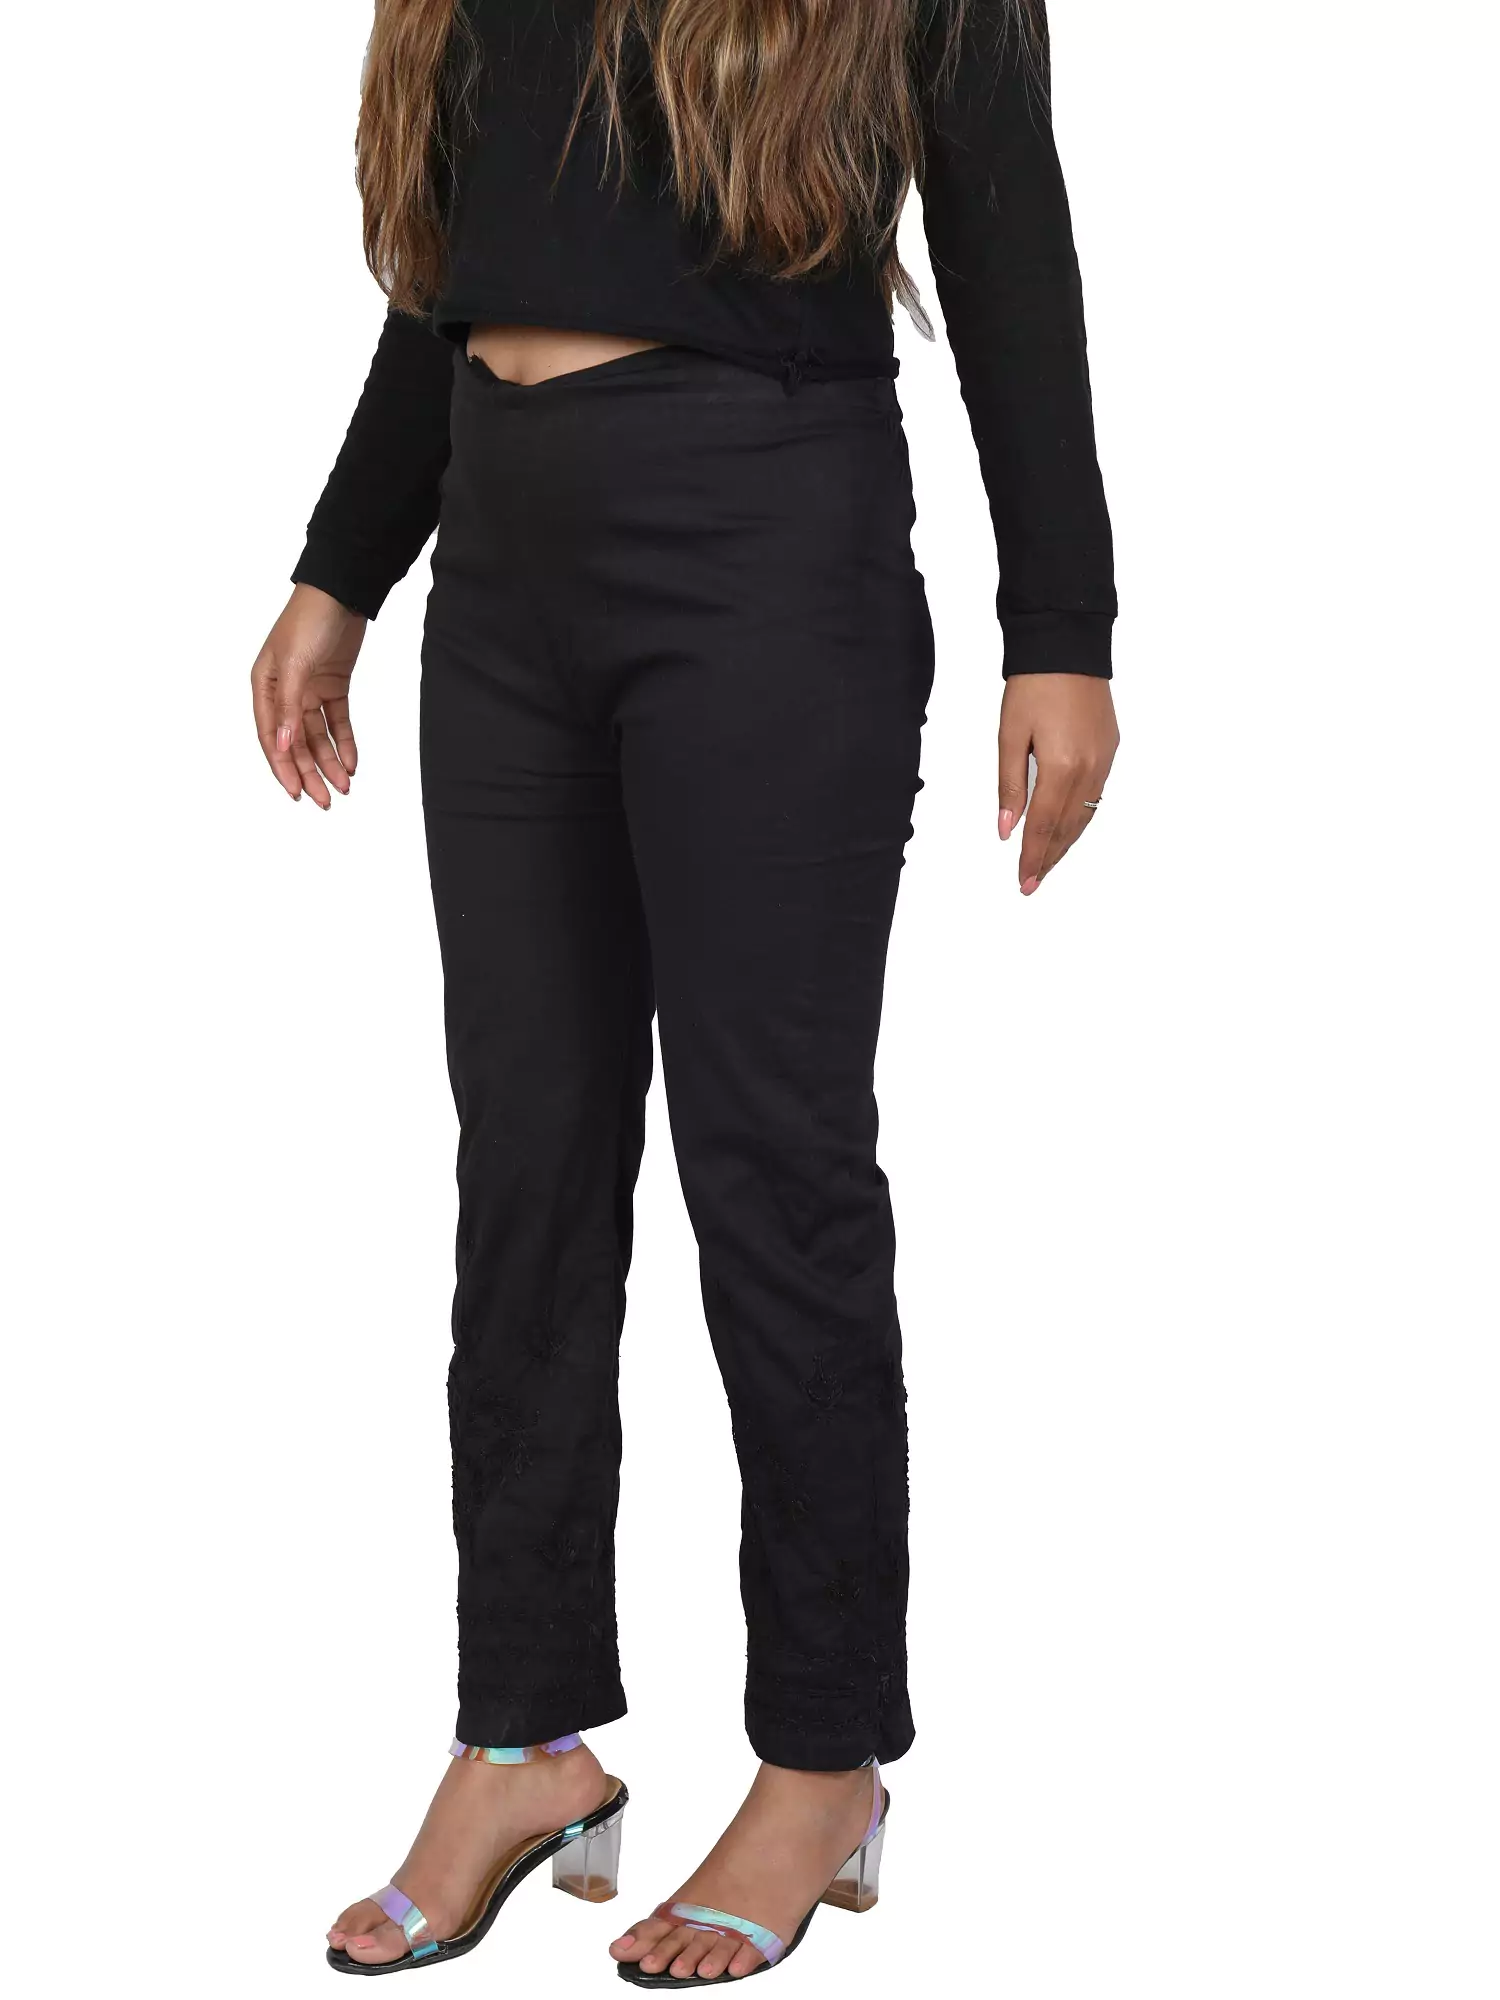 black trousers s 6566299cea12e